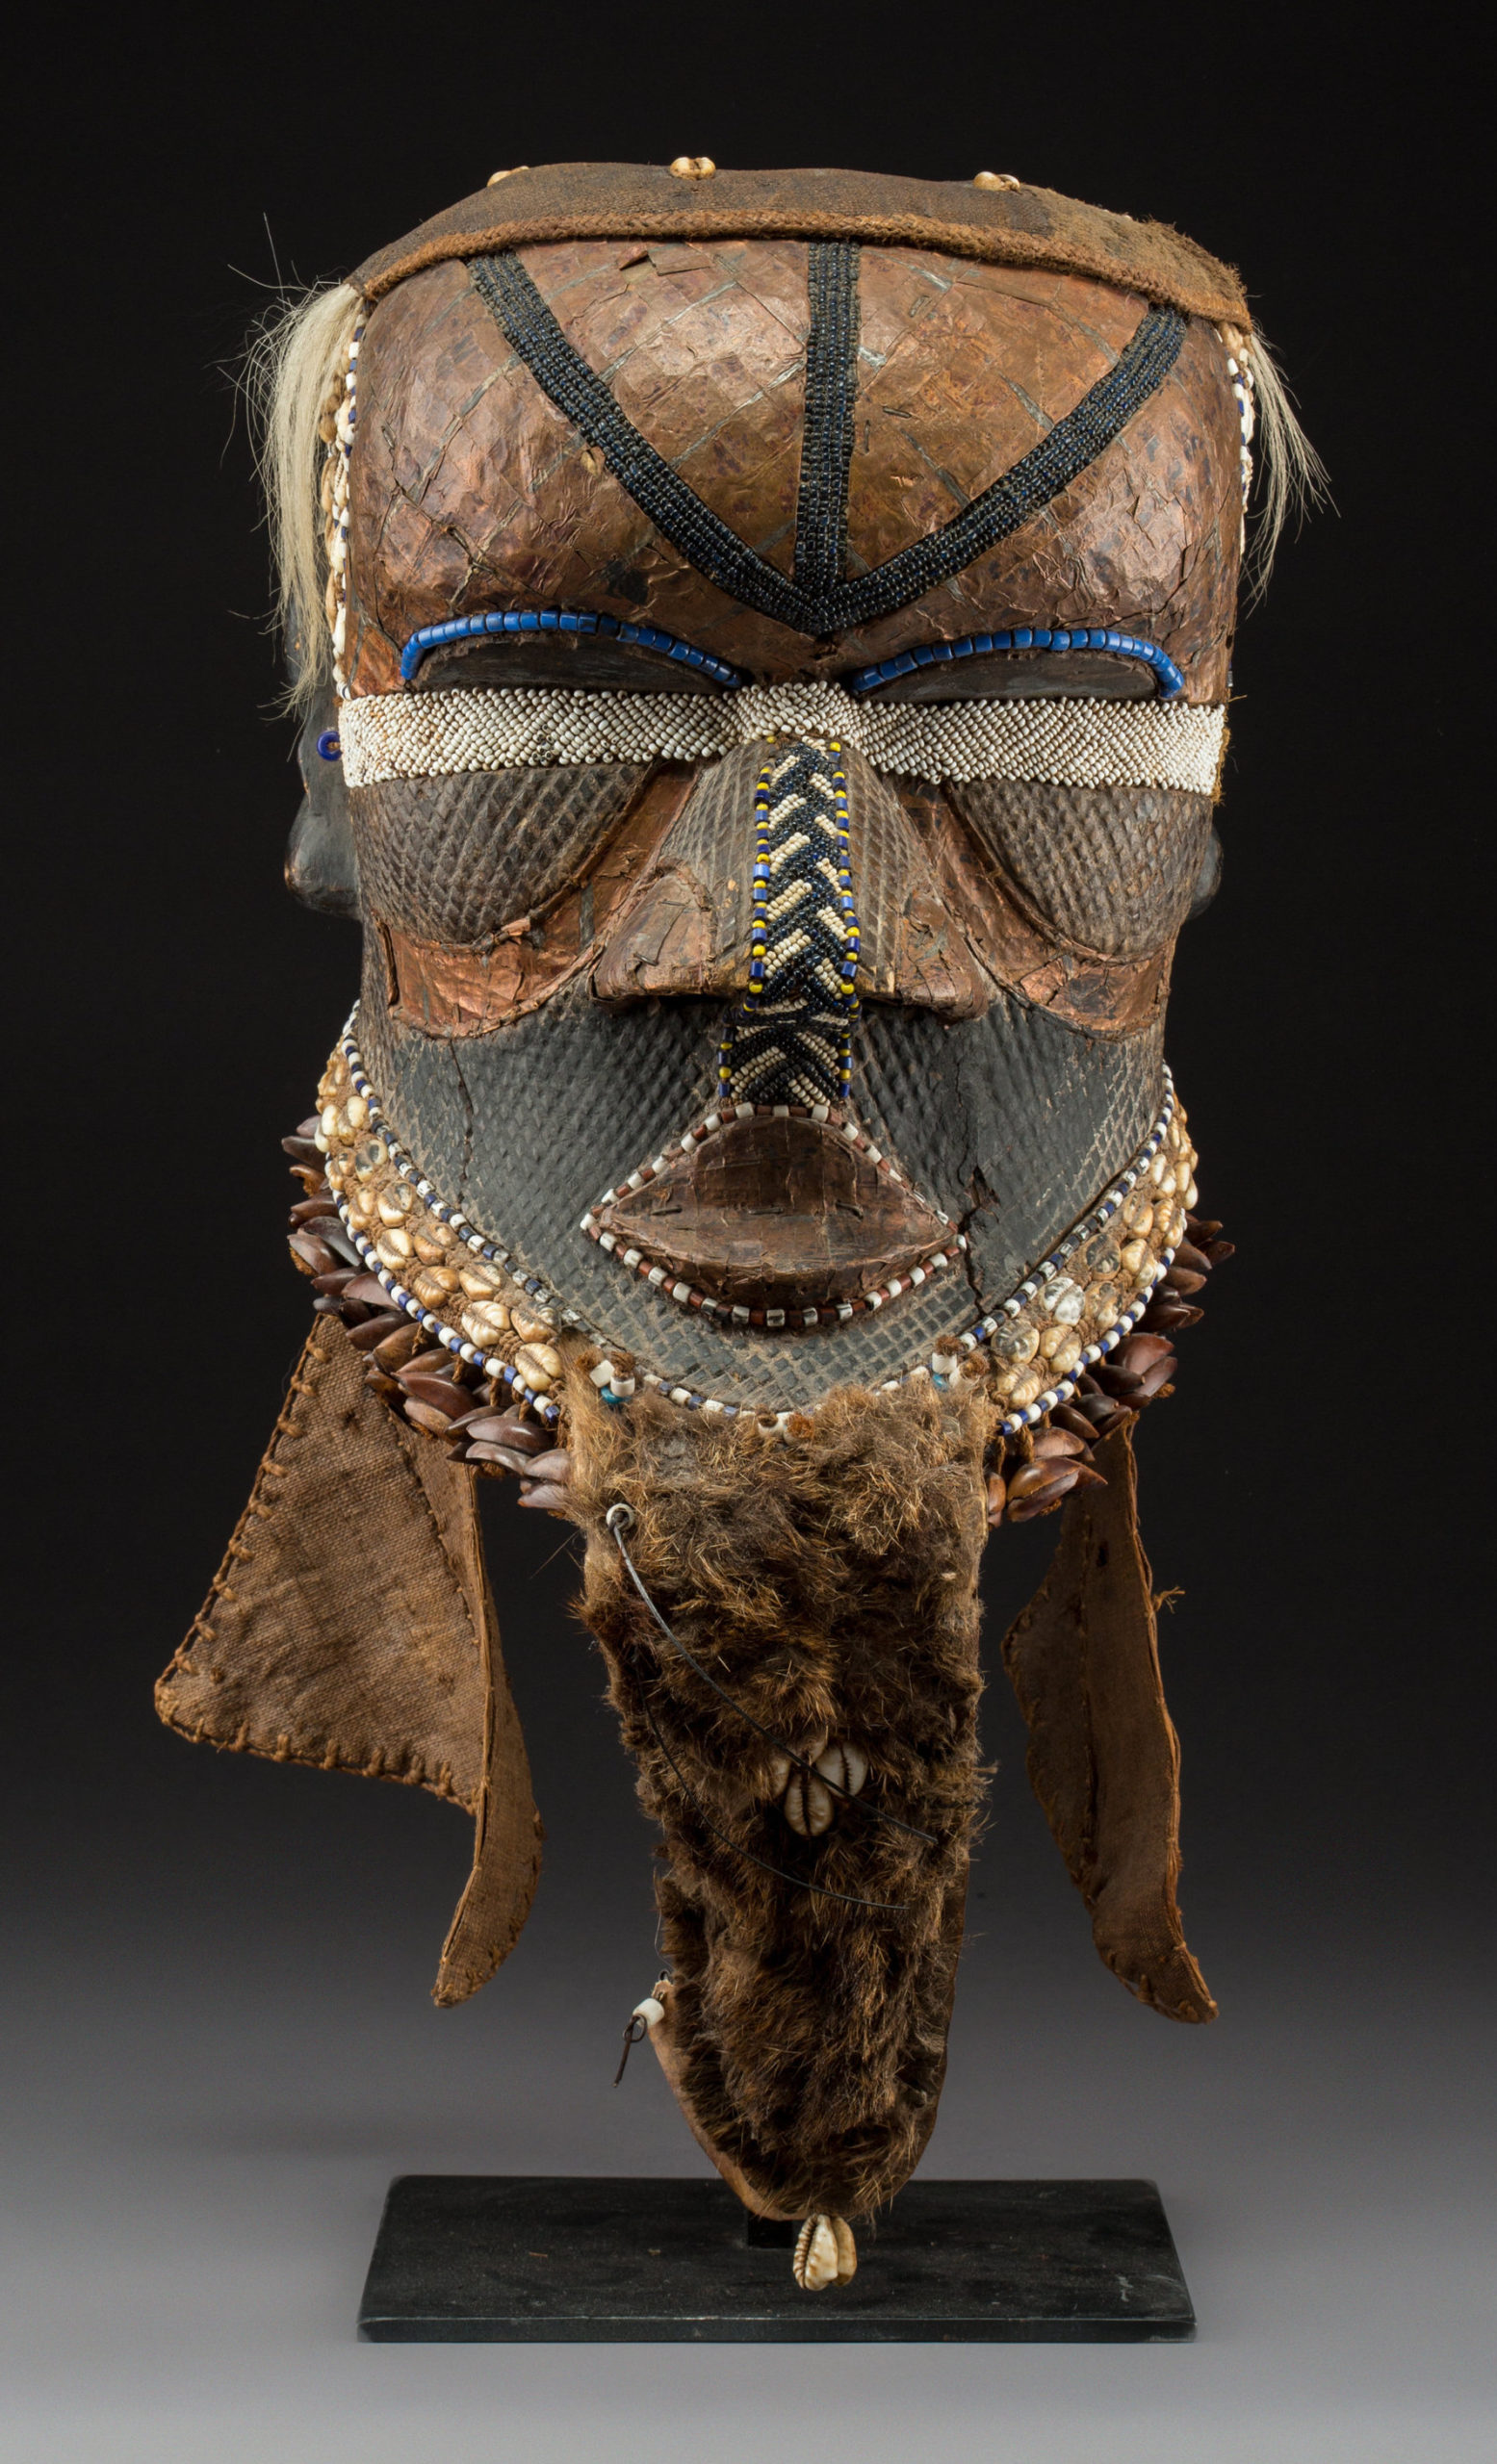 A photo of a Bwoom mask, one of the three royal masks of Kuba masquerade